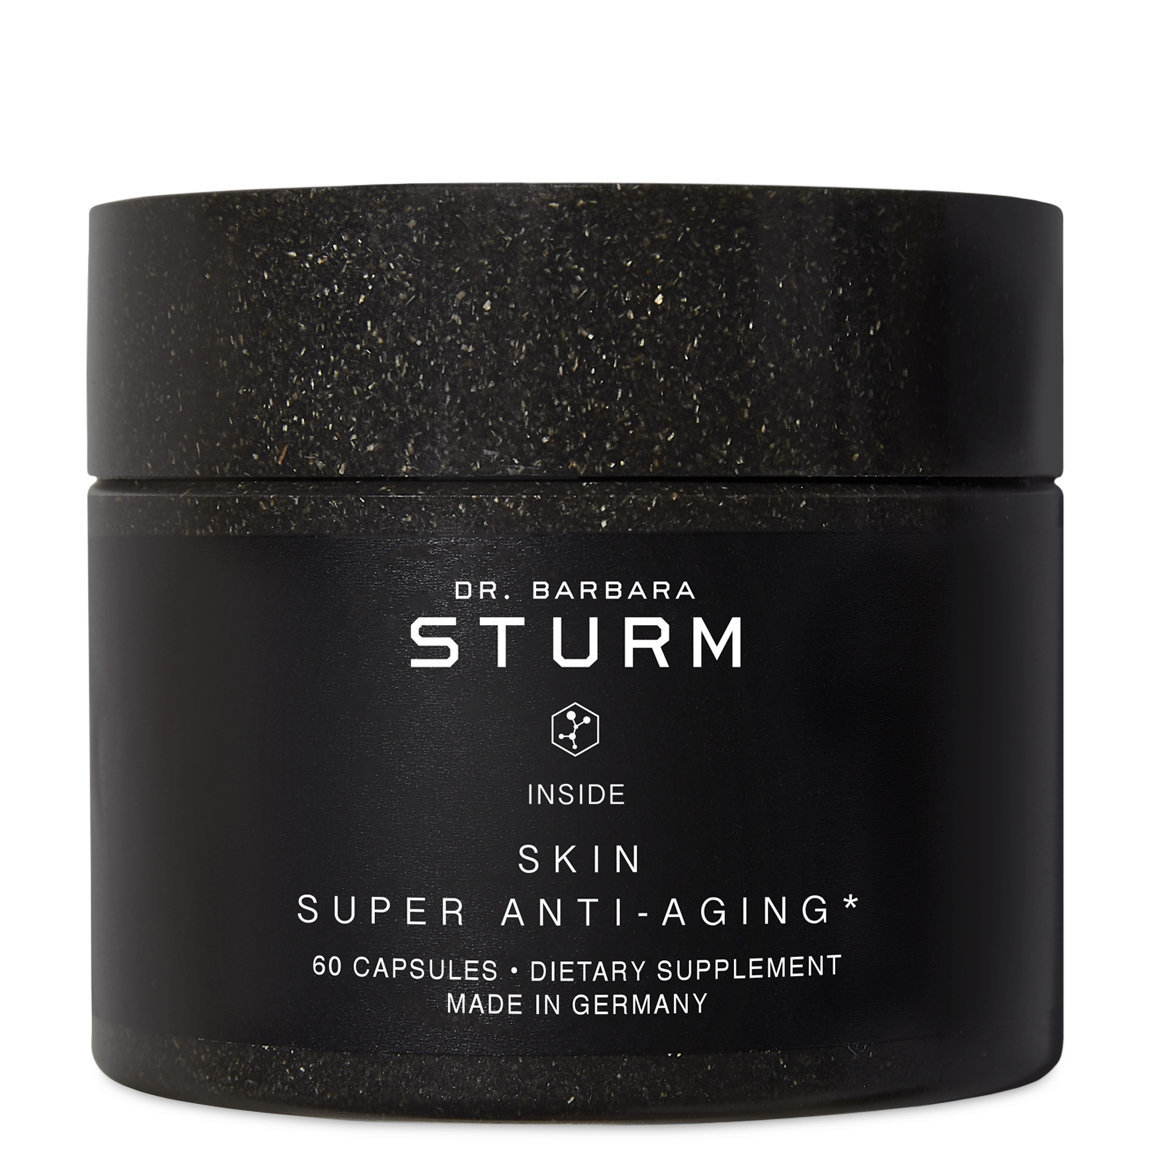 Dr. Barbara Sturm Skin Super Anti-Aging alternative view 1 - product swatch.